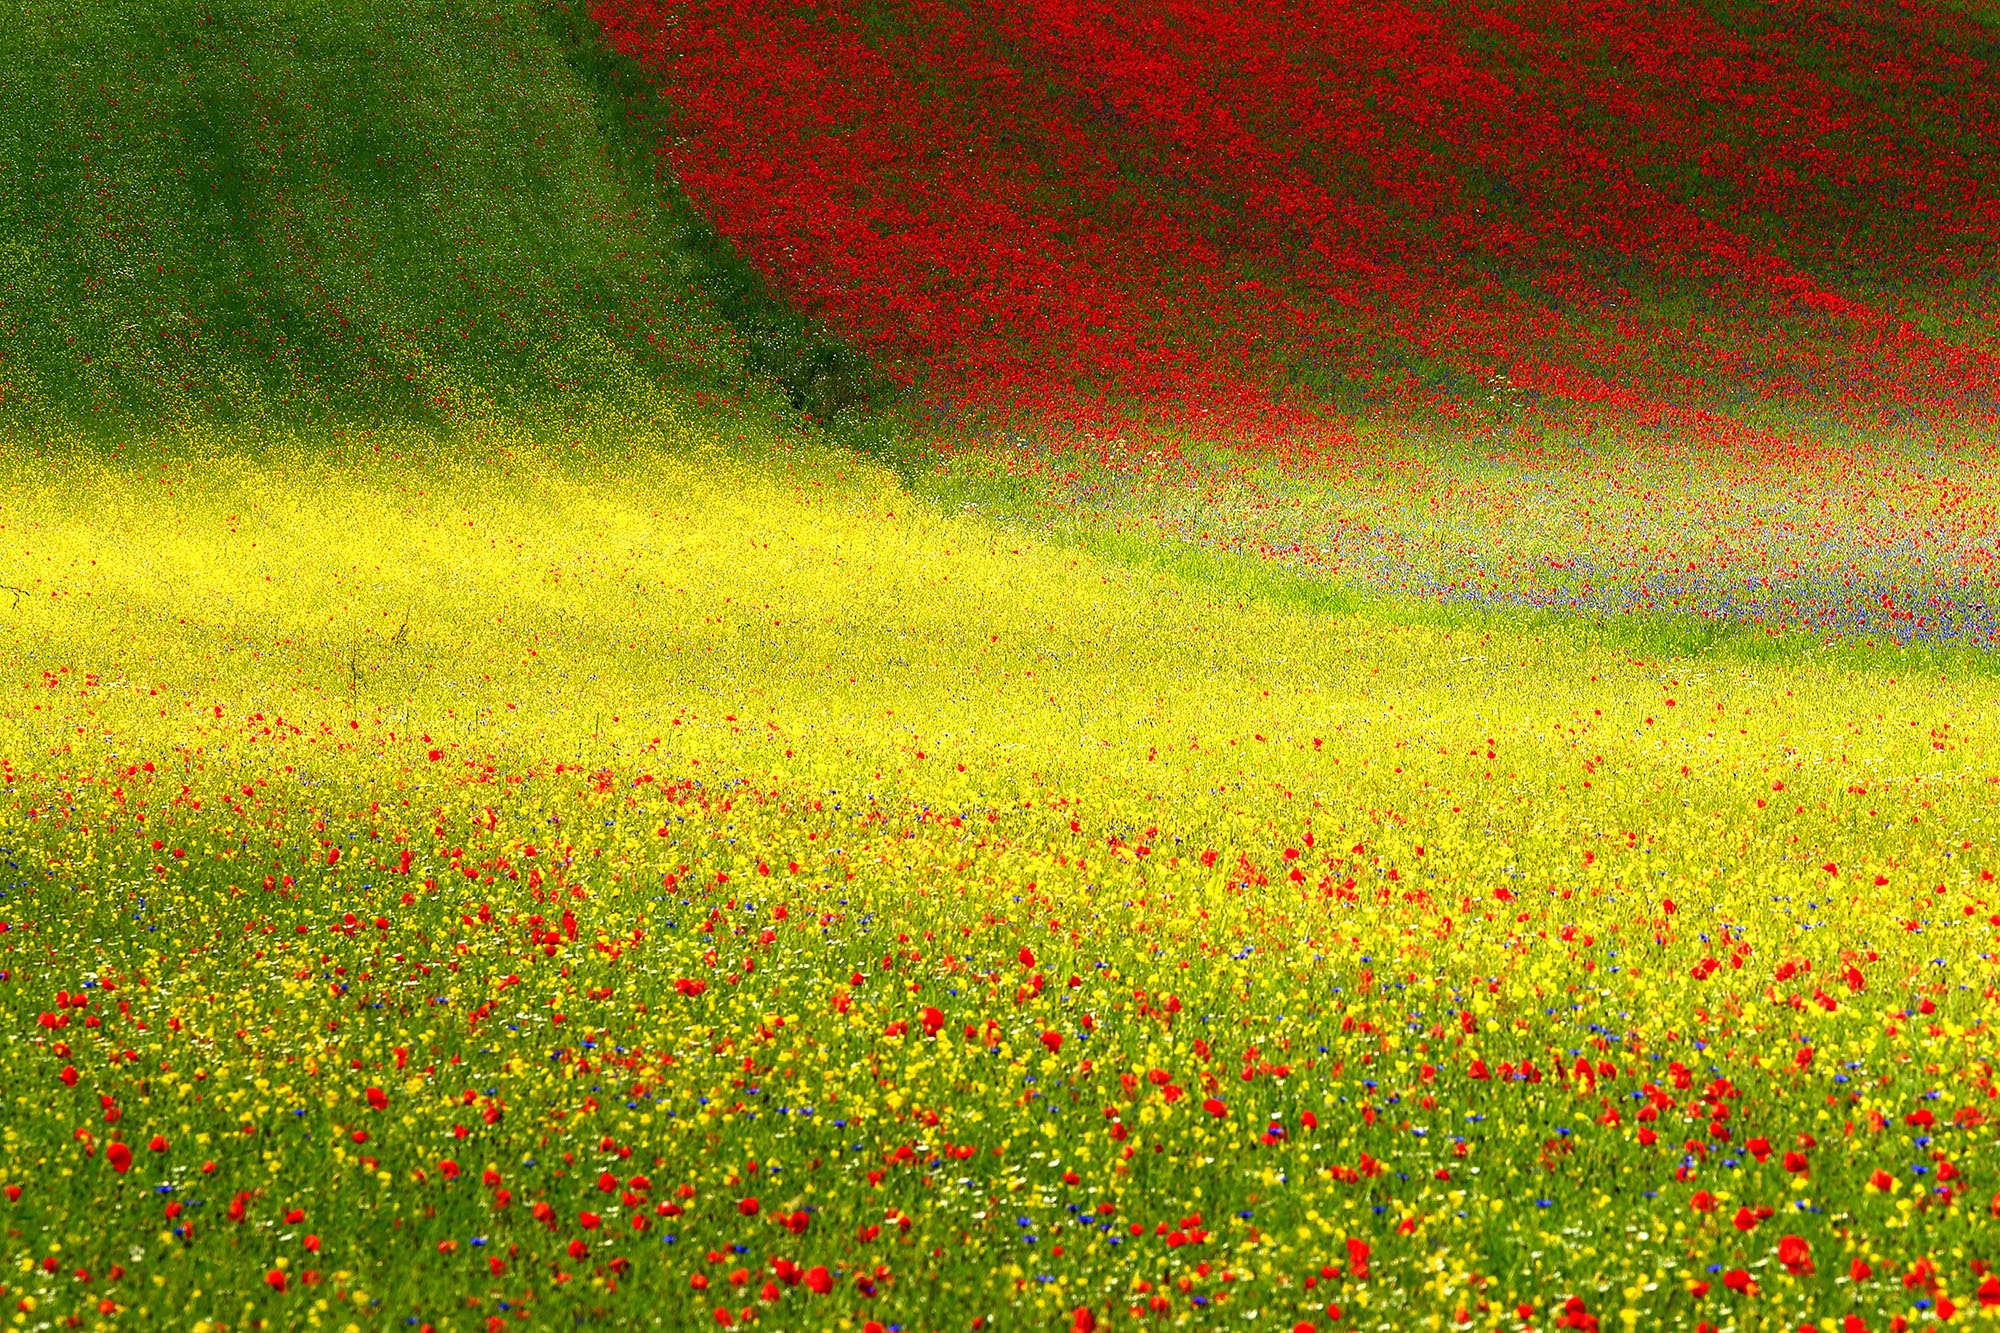 Flowering in the plateau of Castelluccio di Norcia village, Perugia district, Umbria, Italy